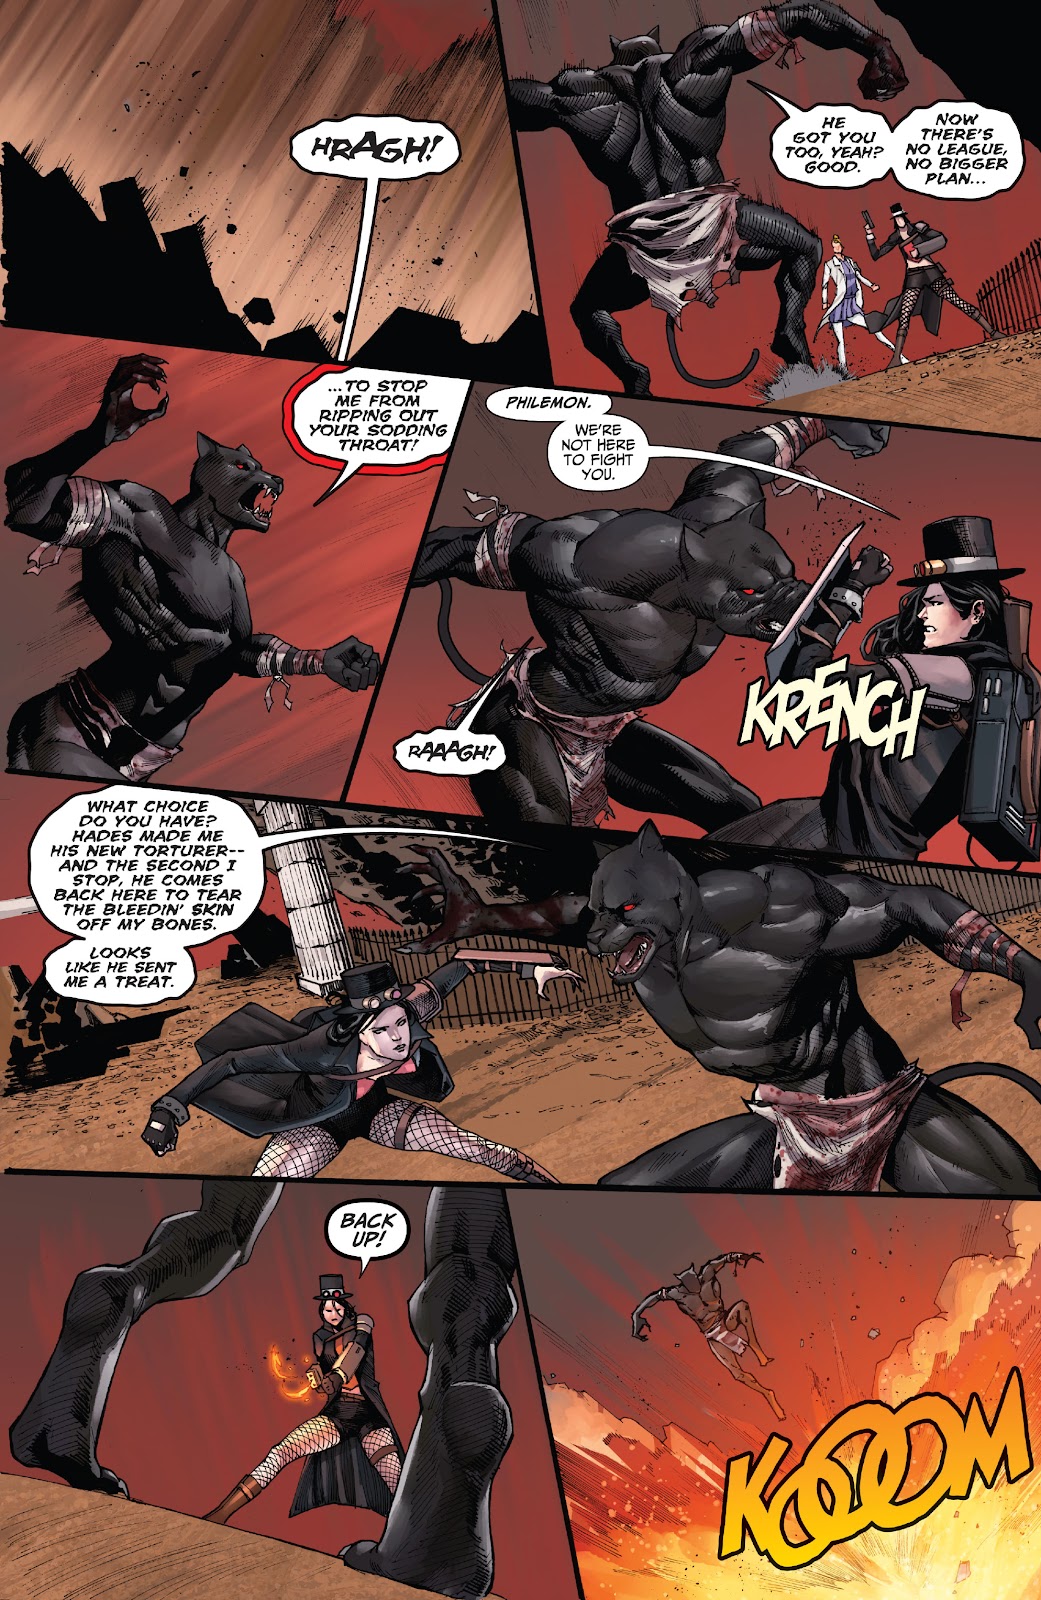 Van Helsing: Return of the League of Monsters issue 2 - Page 13